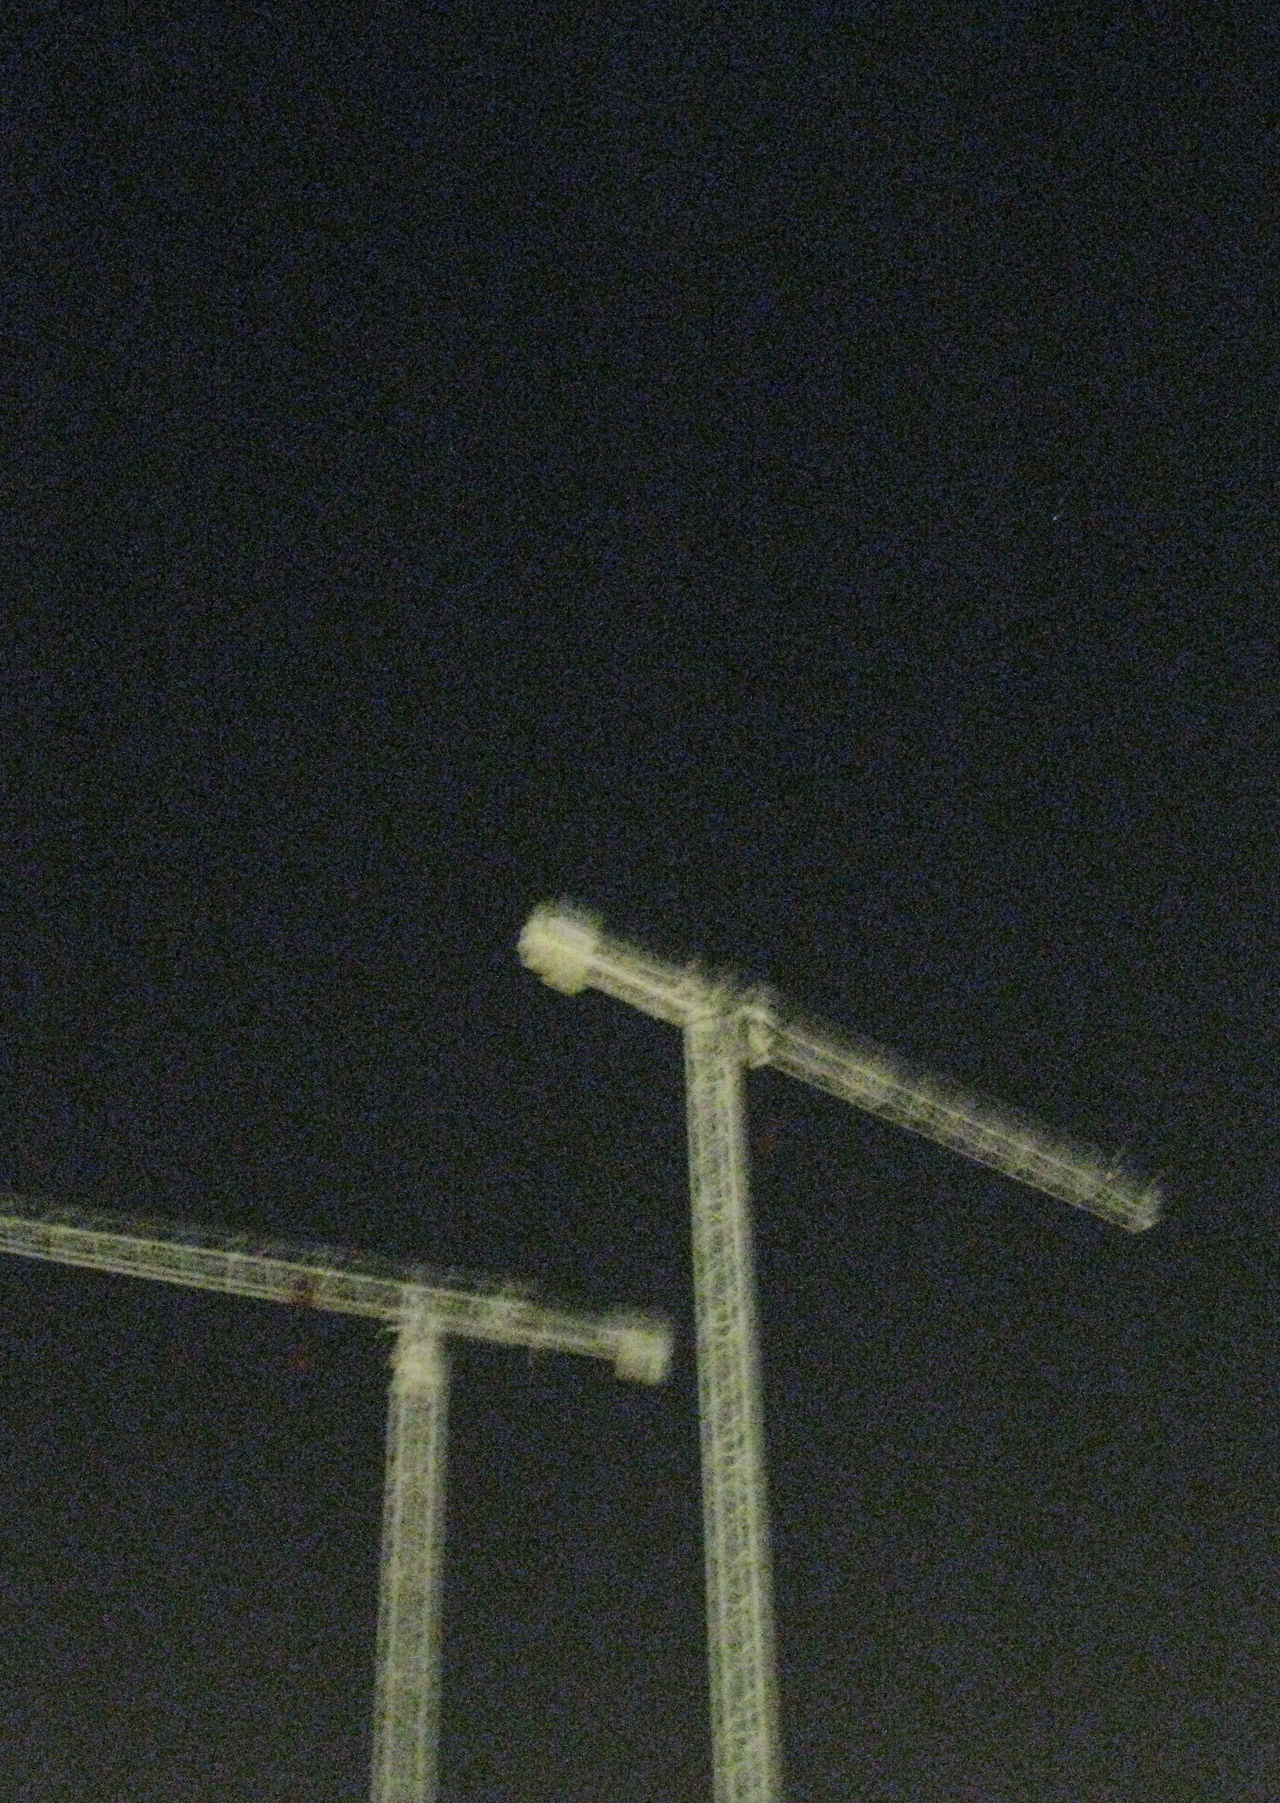 White black crane cranes night sky skies city london photos photo fotos foto photography photographer photograph documentary reportage taking photos street photography fil digital camera